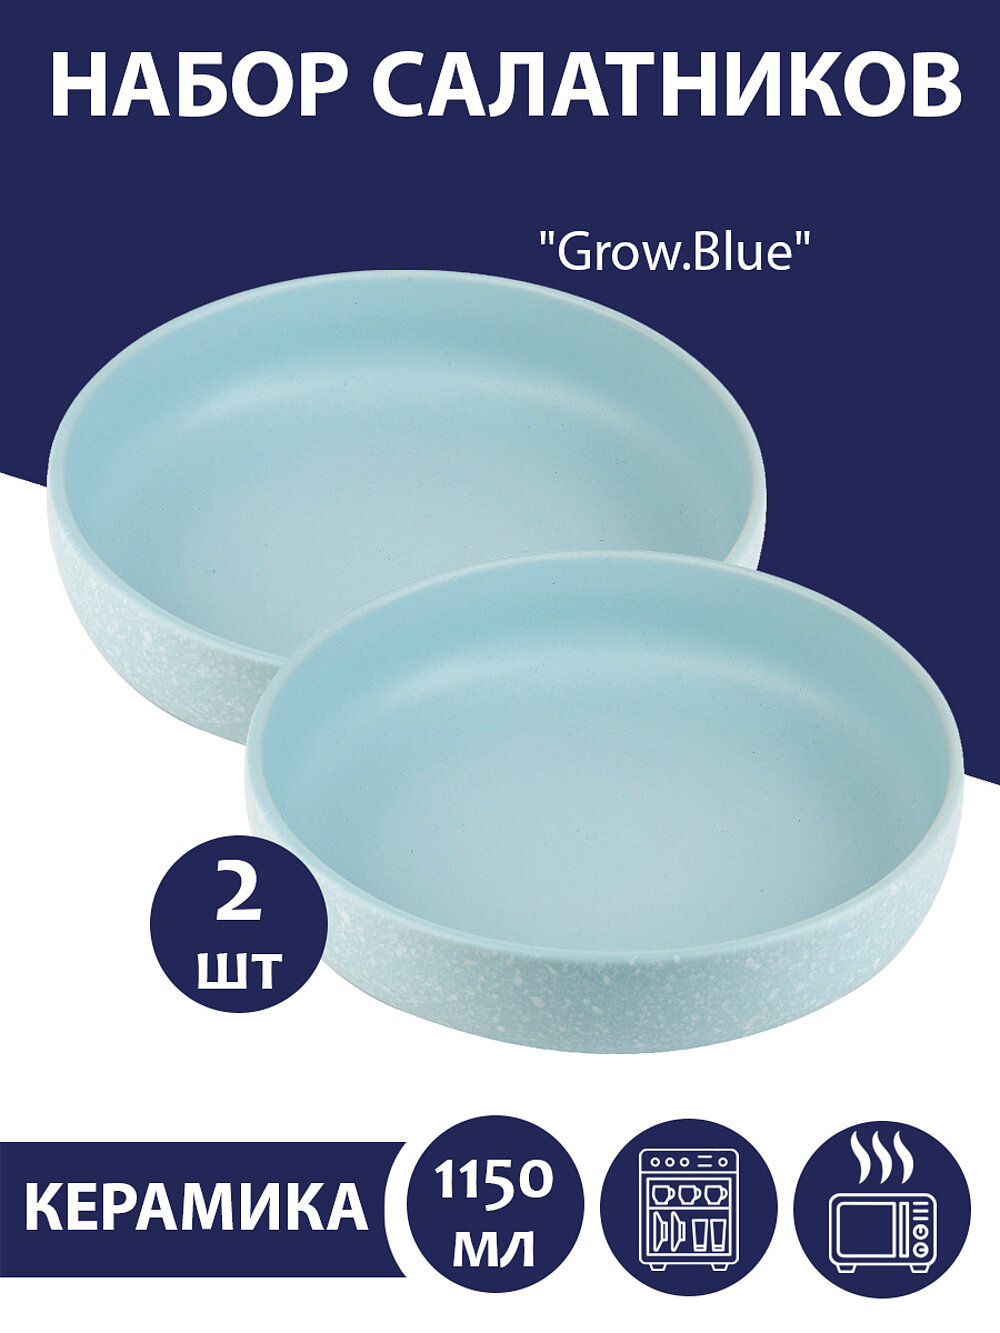 Набор салатников 2 шт "Grow.Blue", мл, Nouvelle